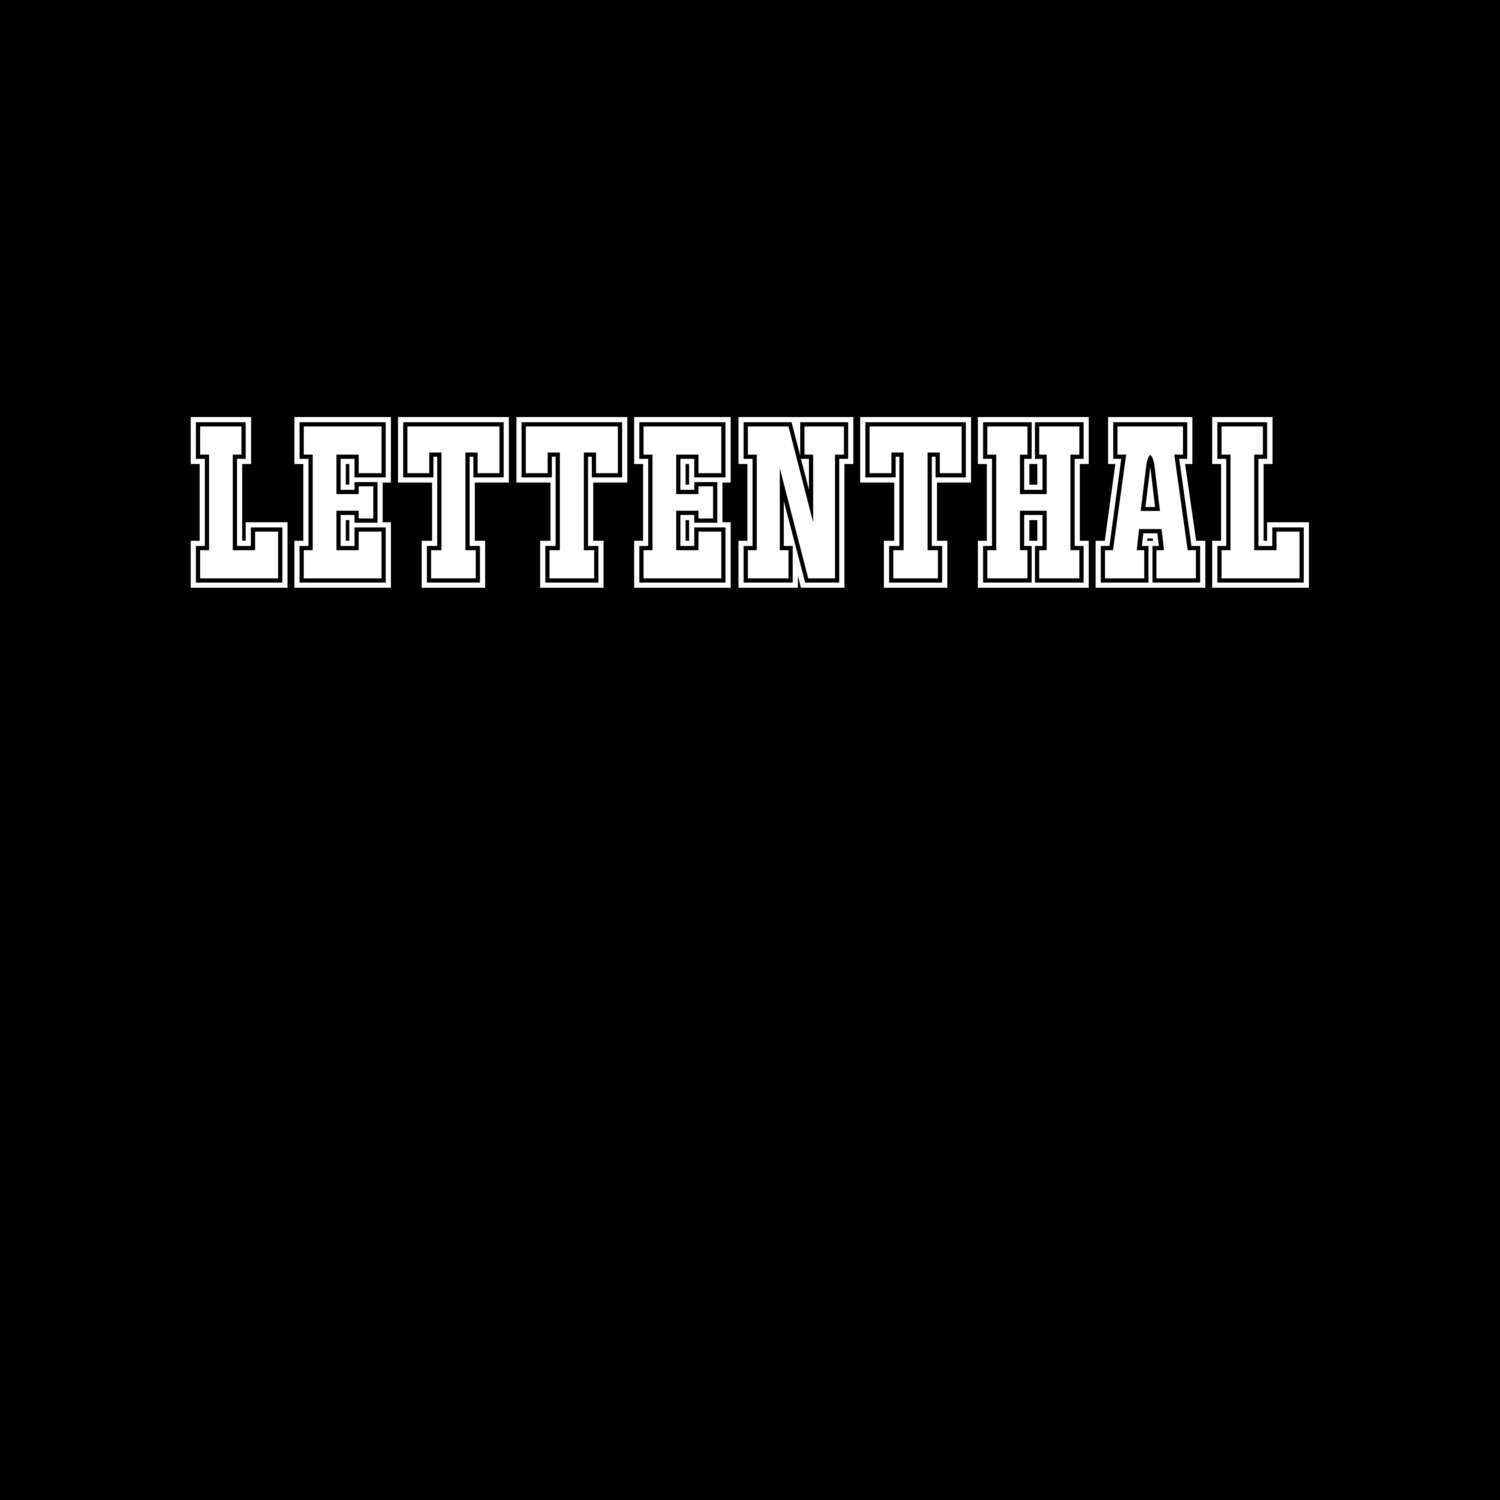 Lettenthal T-Shirt »Classic«